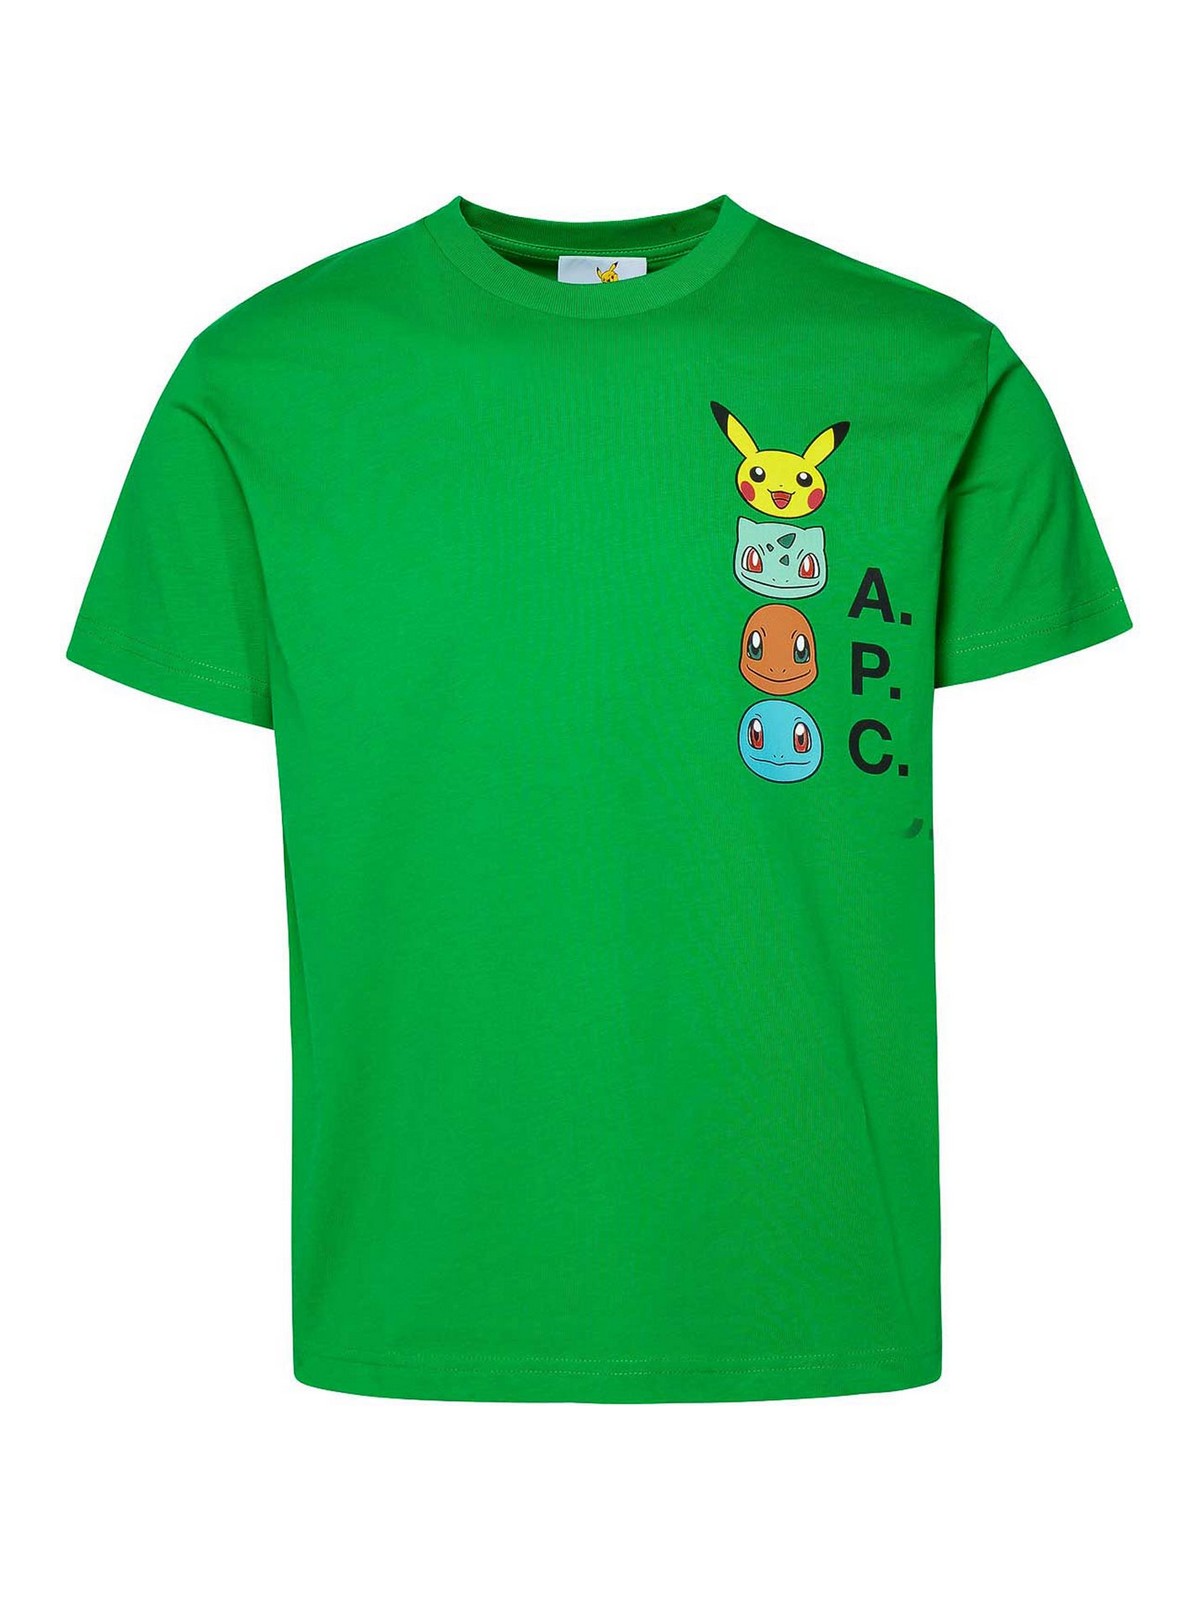 Apc T-shirt Pokmon In Green